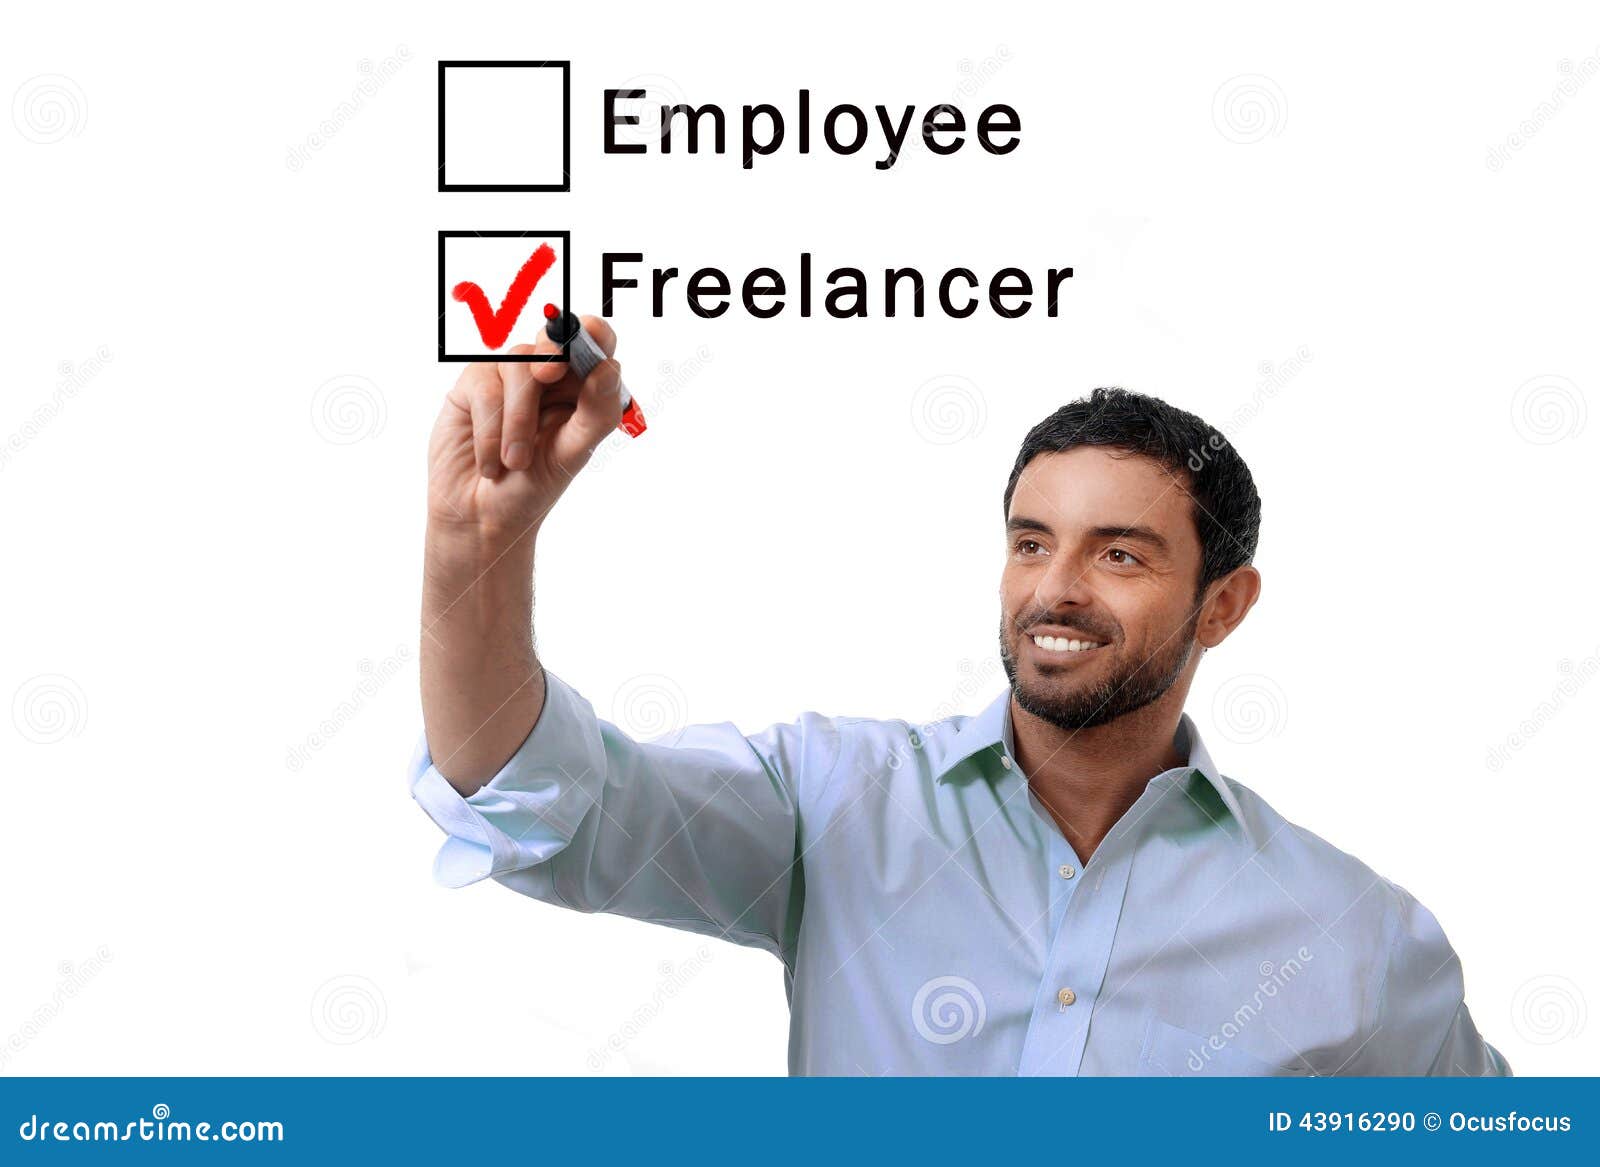 businessman choosing freelancer to employee at formular ticking box with red marker